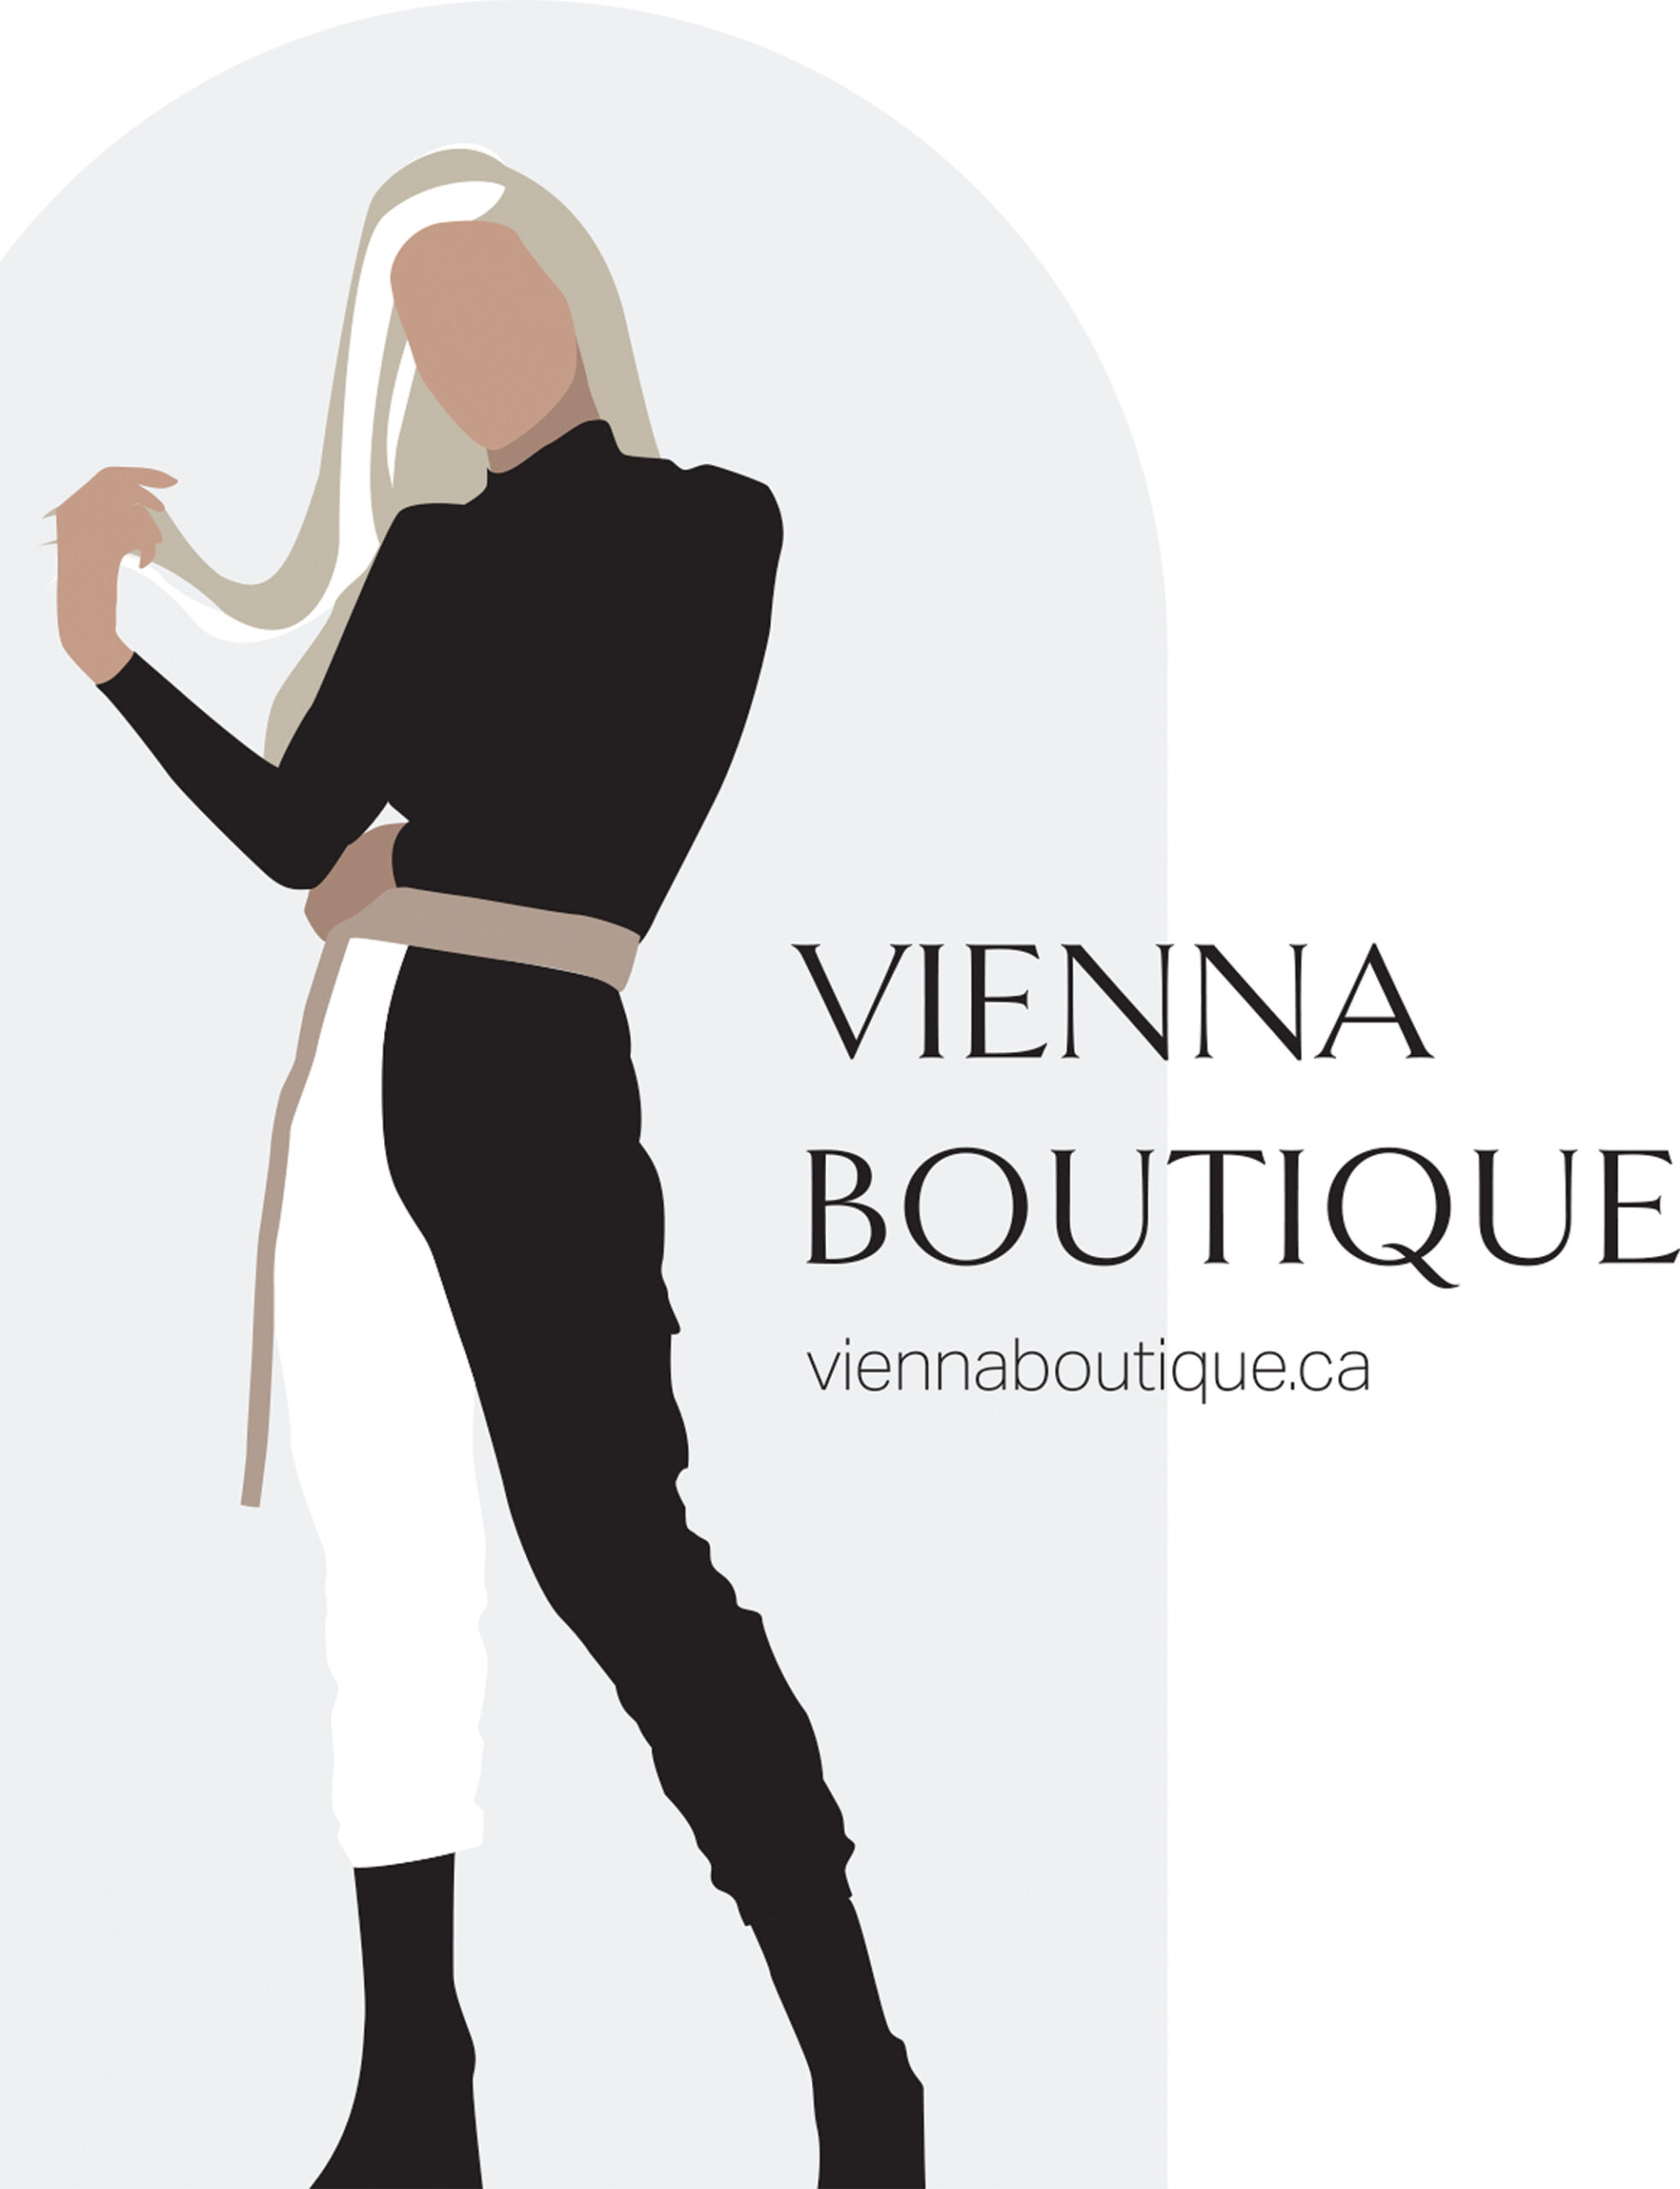 Magazine advertisement for hypothetical brand Vienna Boutique.